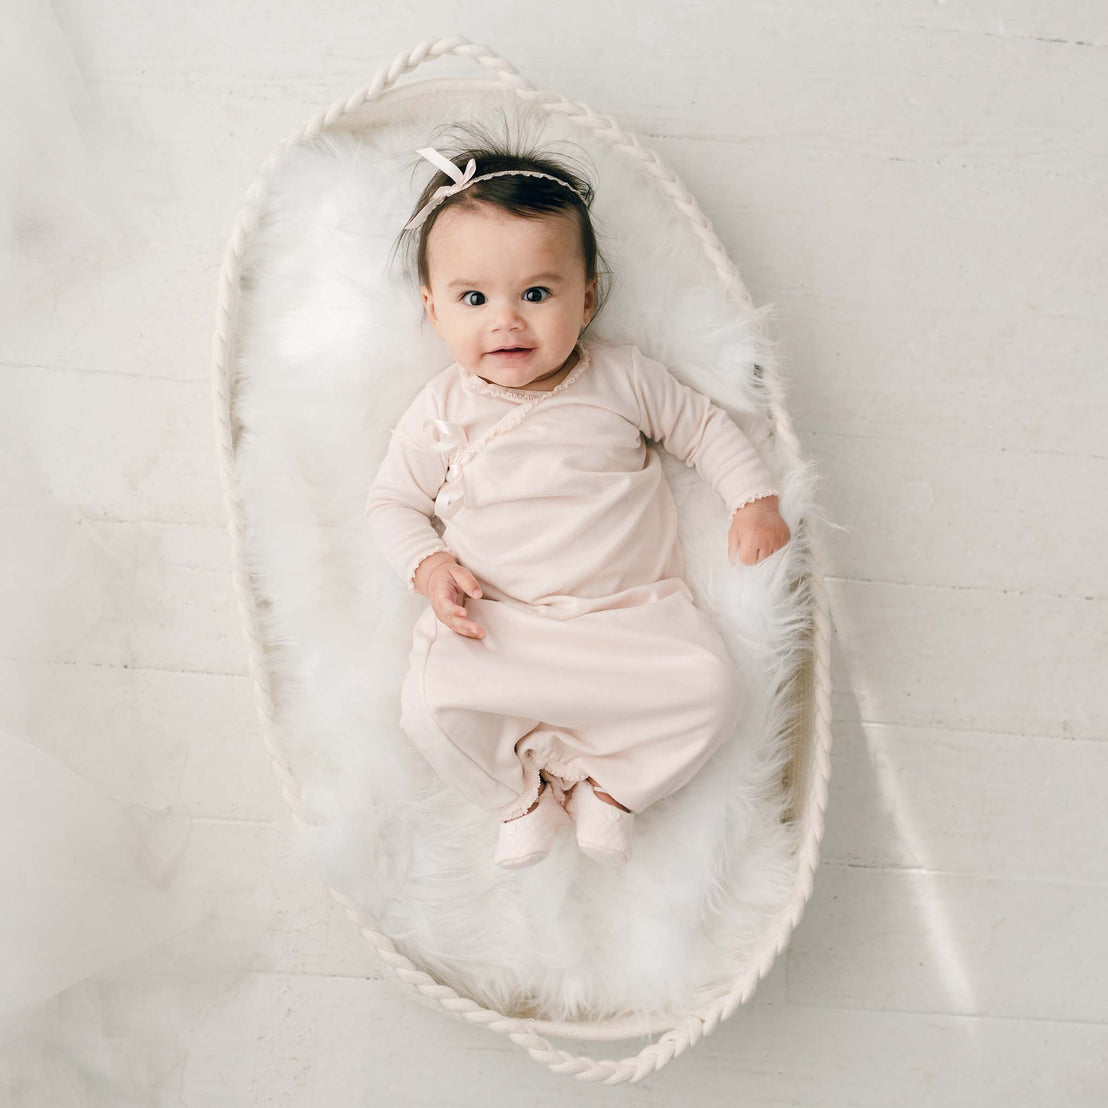 Ava Newborn Gift Set - Save 10%